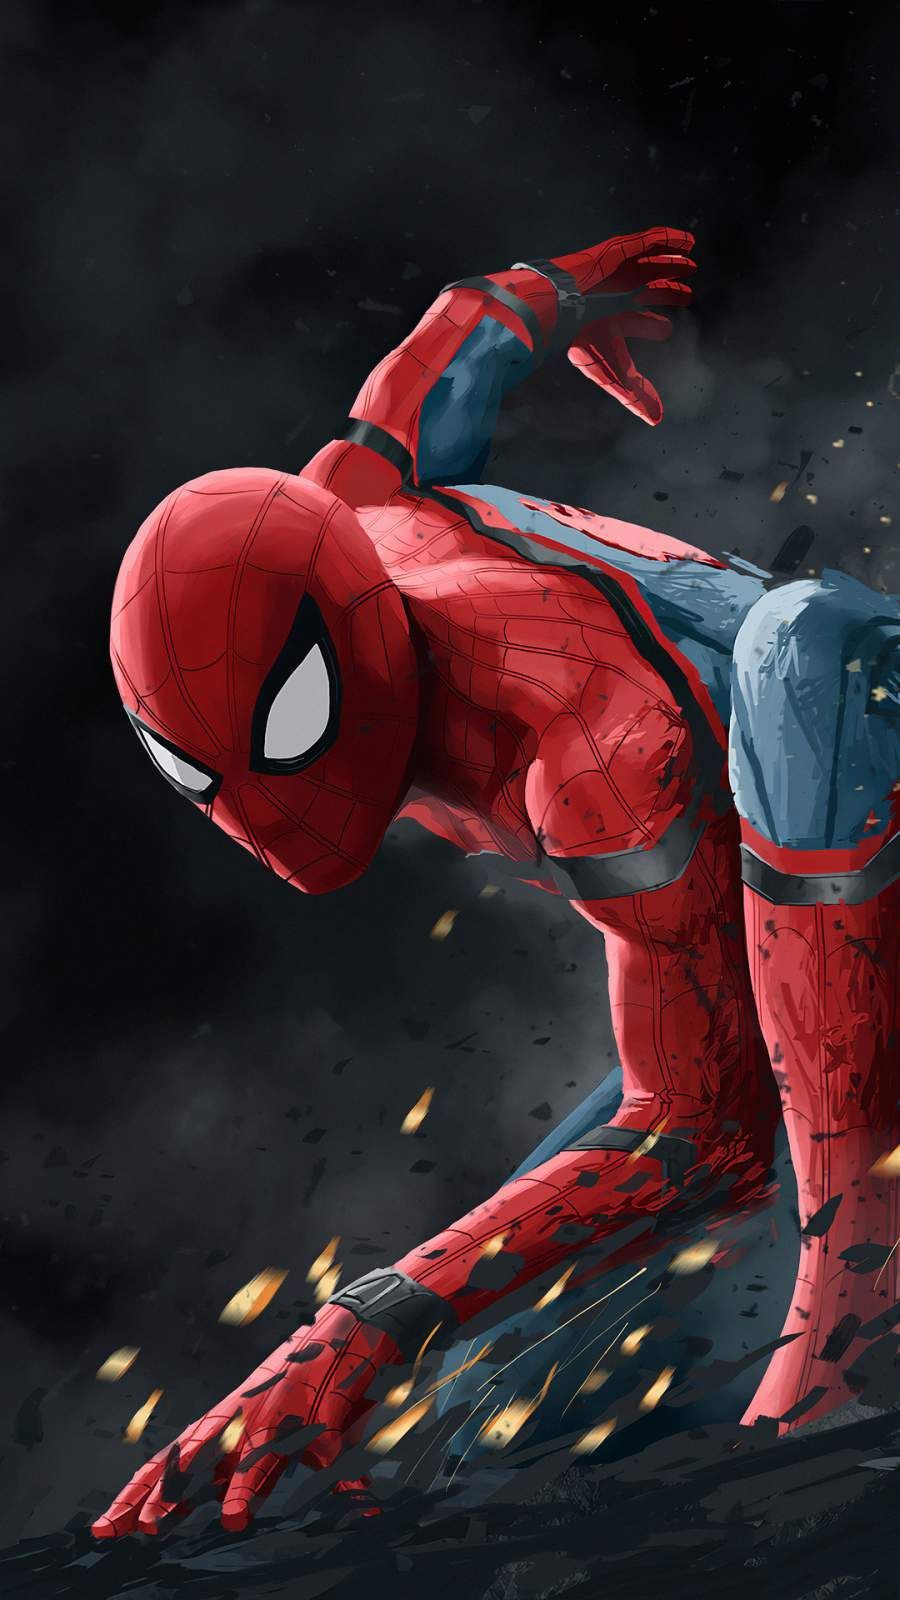 Spider Man Action Art iPhone Wallpaper. Spiderman, Marvel comics wallpaper, Amazing spiderman